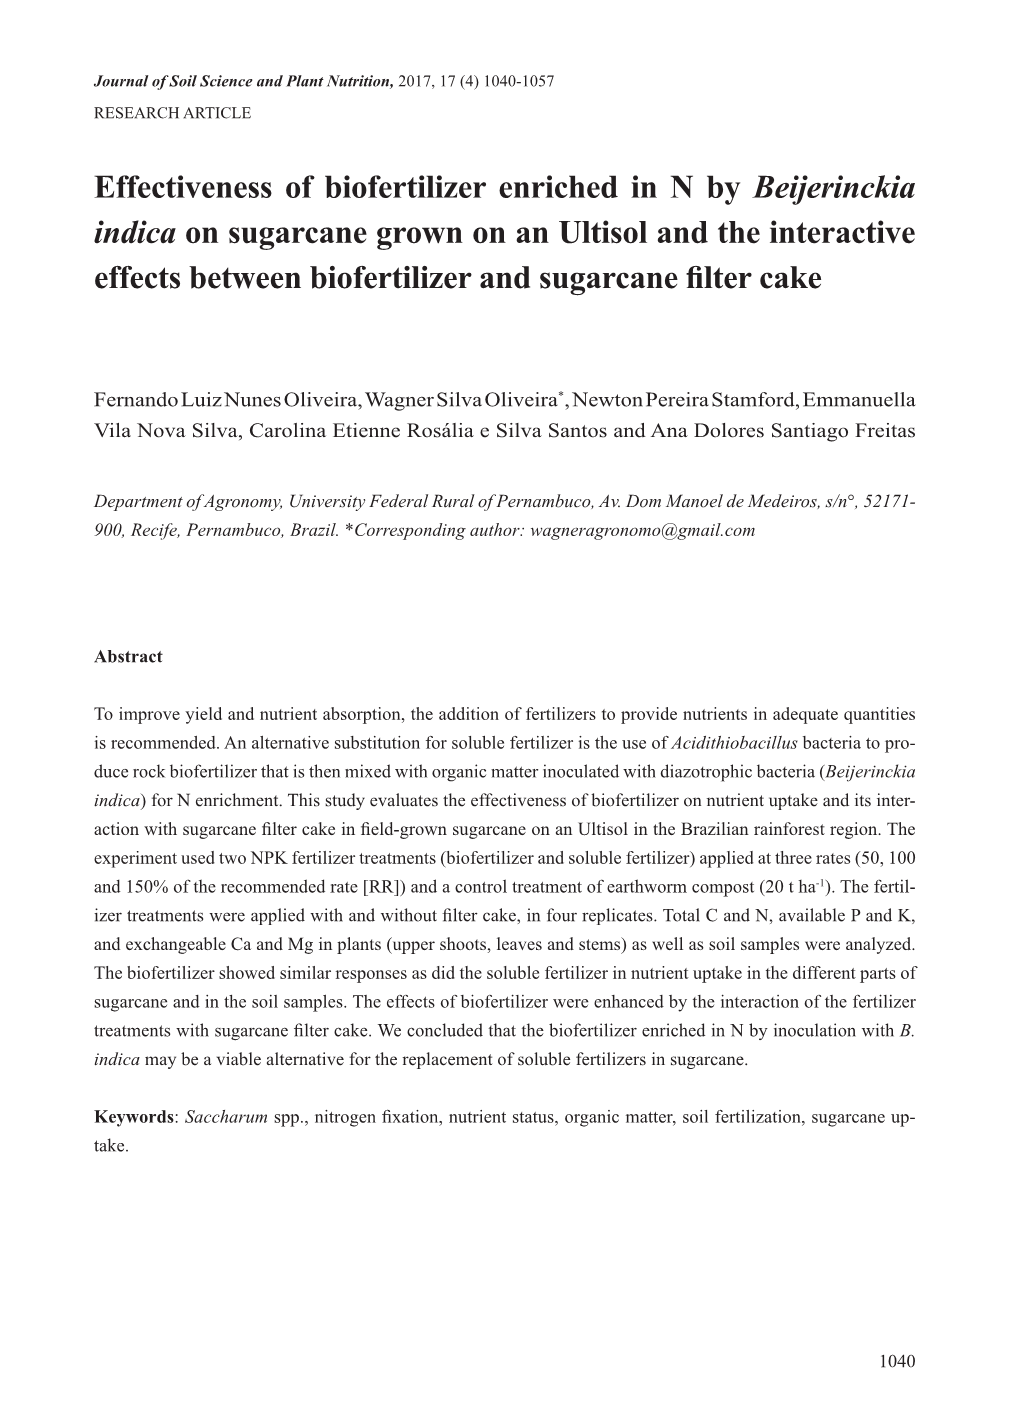 Effectiveness of Biofertilizer Enriched in N by Beijerinckia Indica On